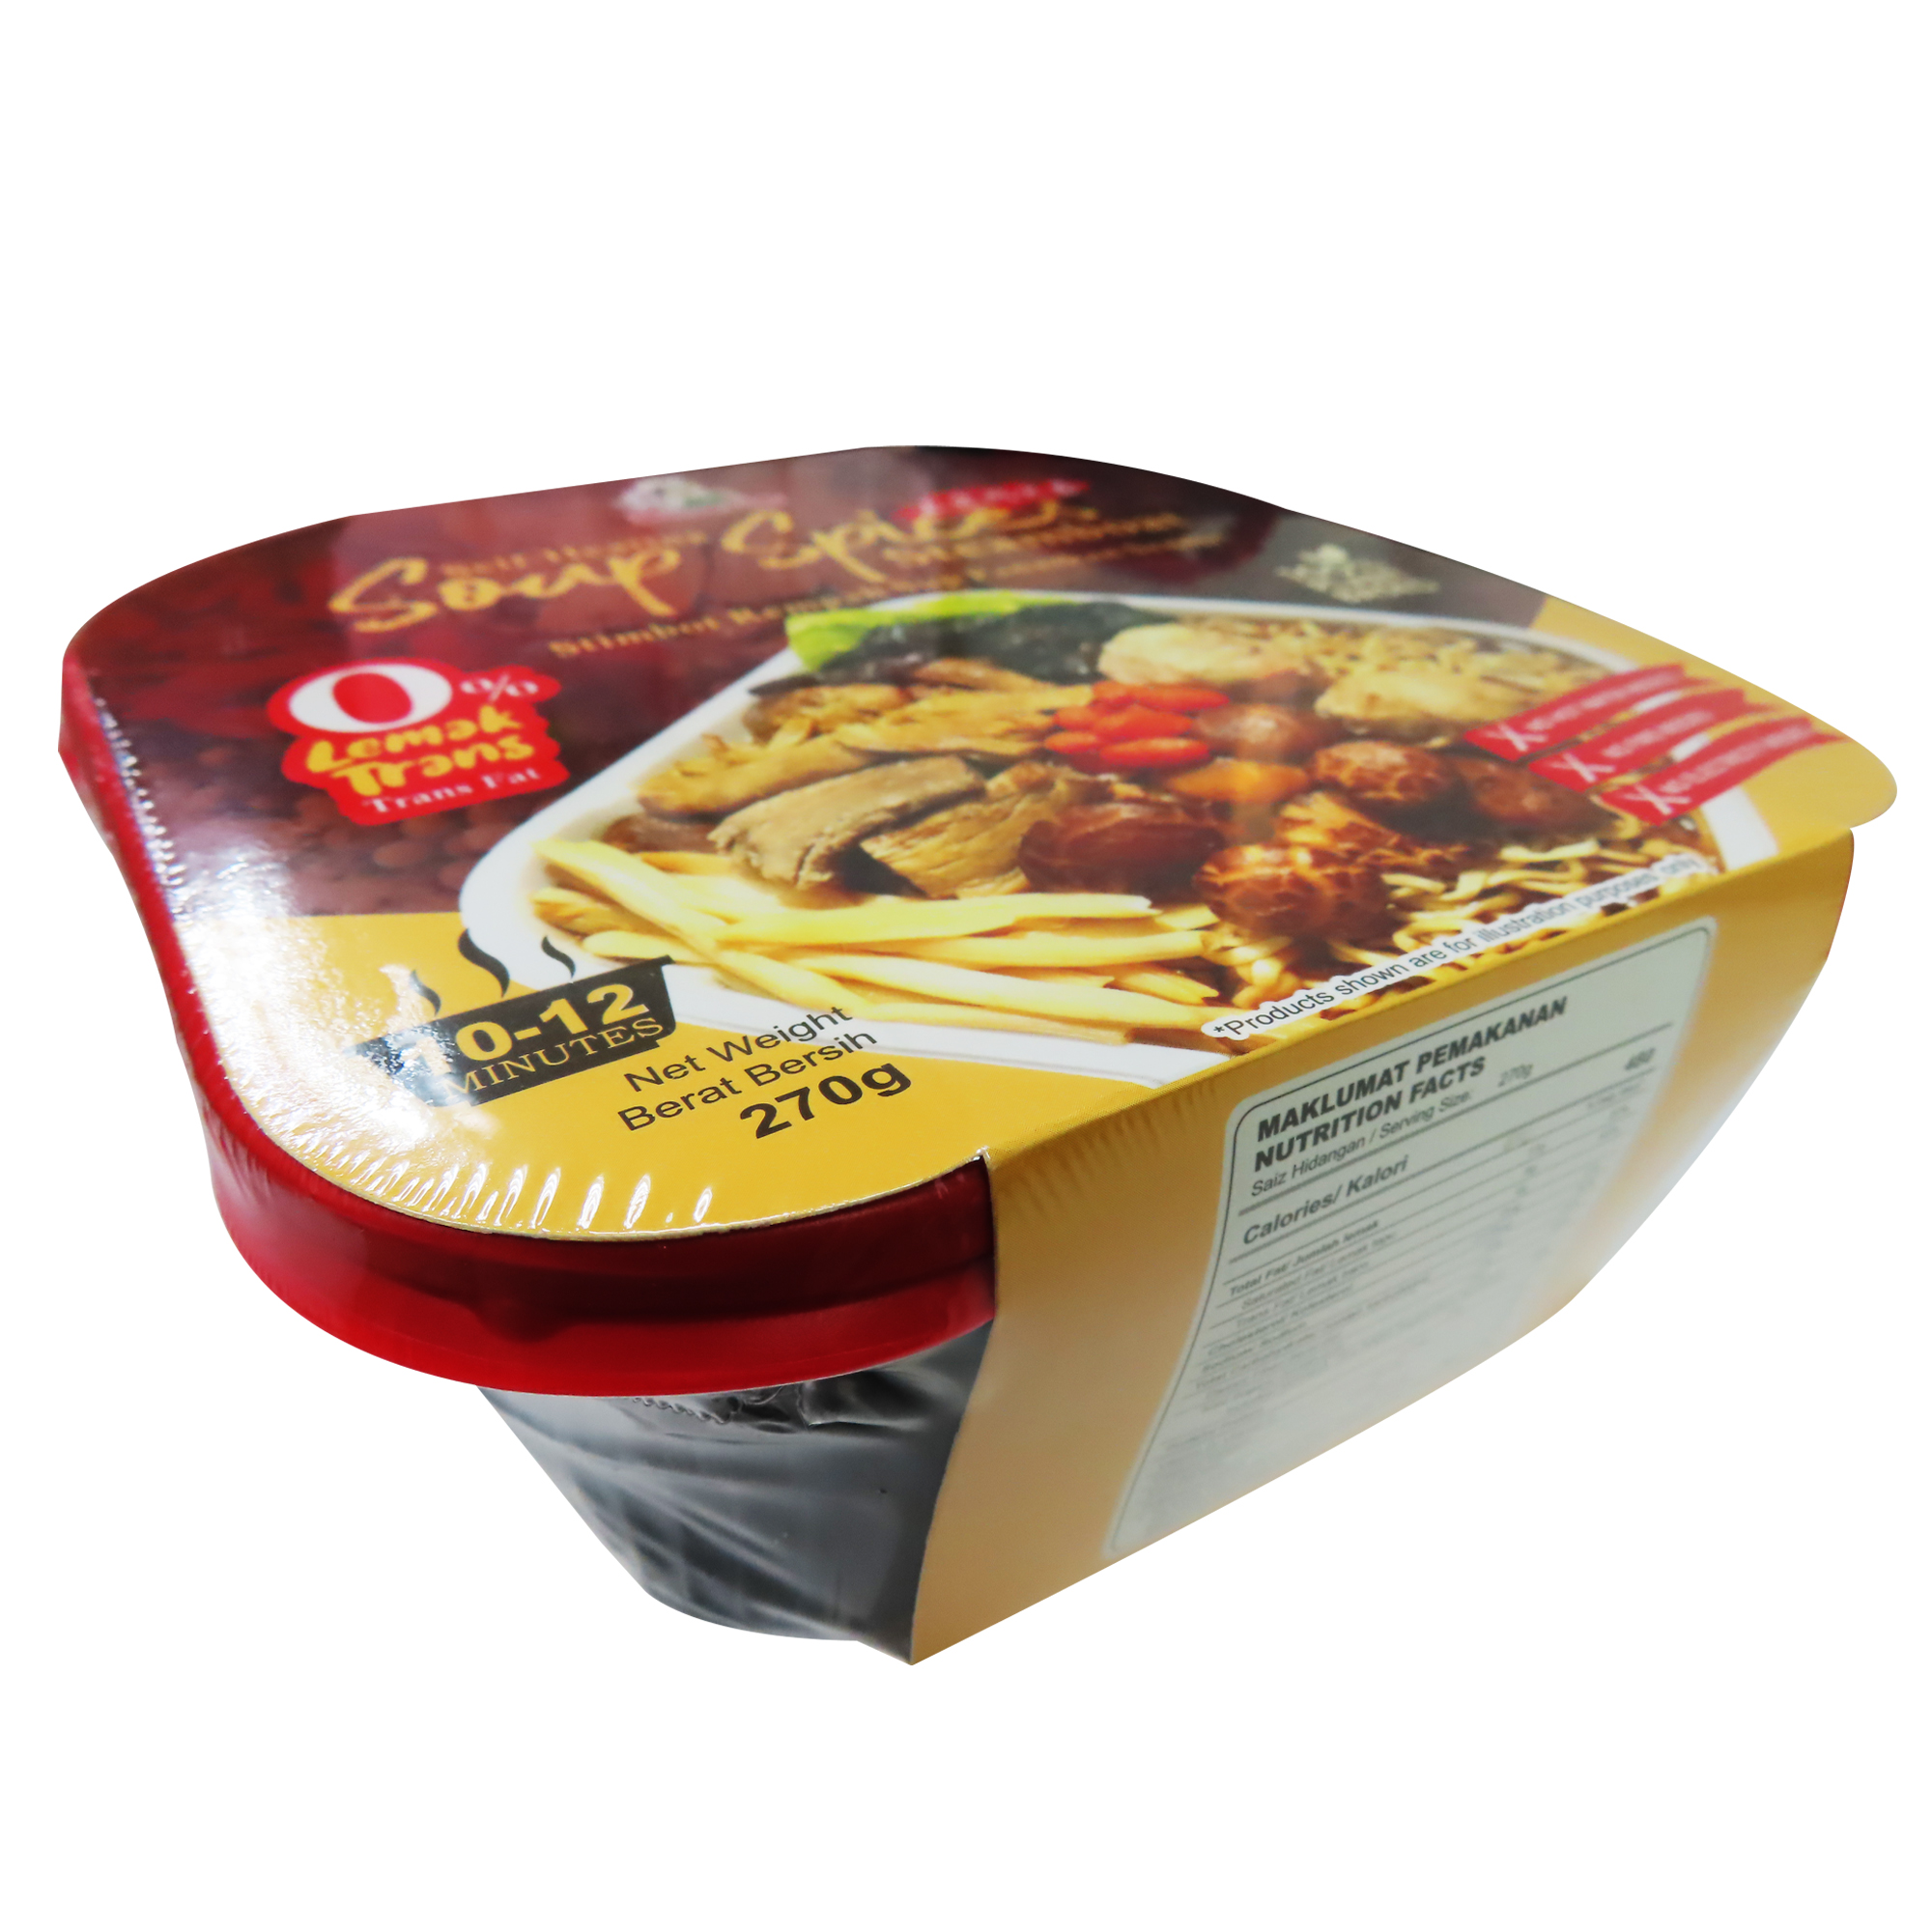 Image  MMV Self Heating Soup Spices Steamboat 懒人正宗肉骨茶火锅 270grams